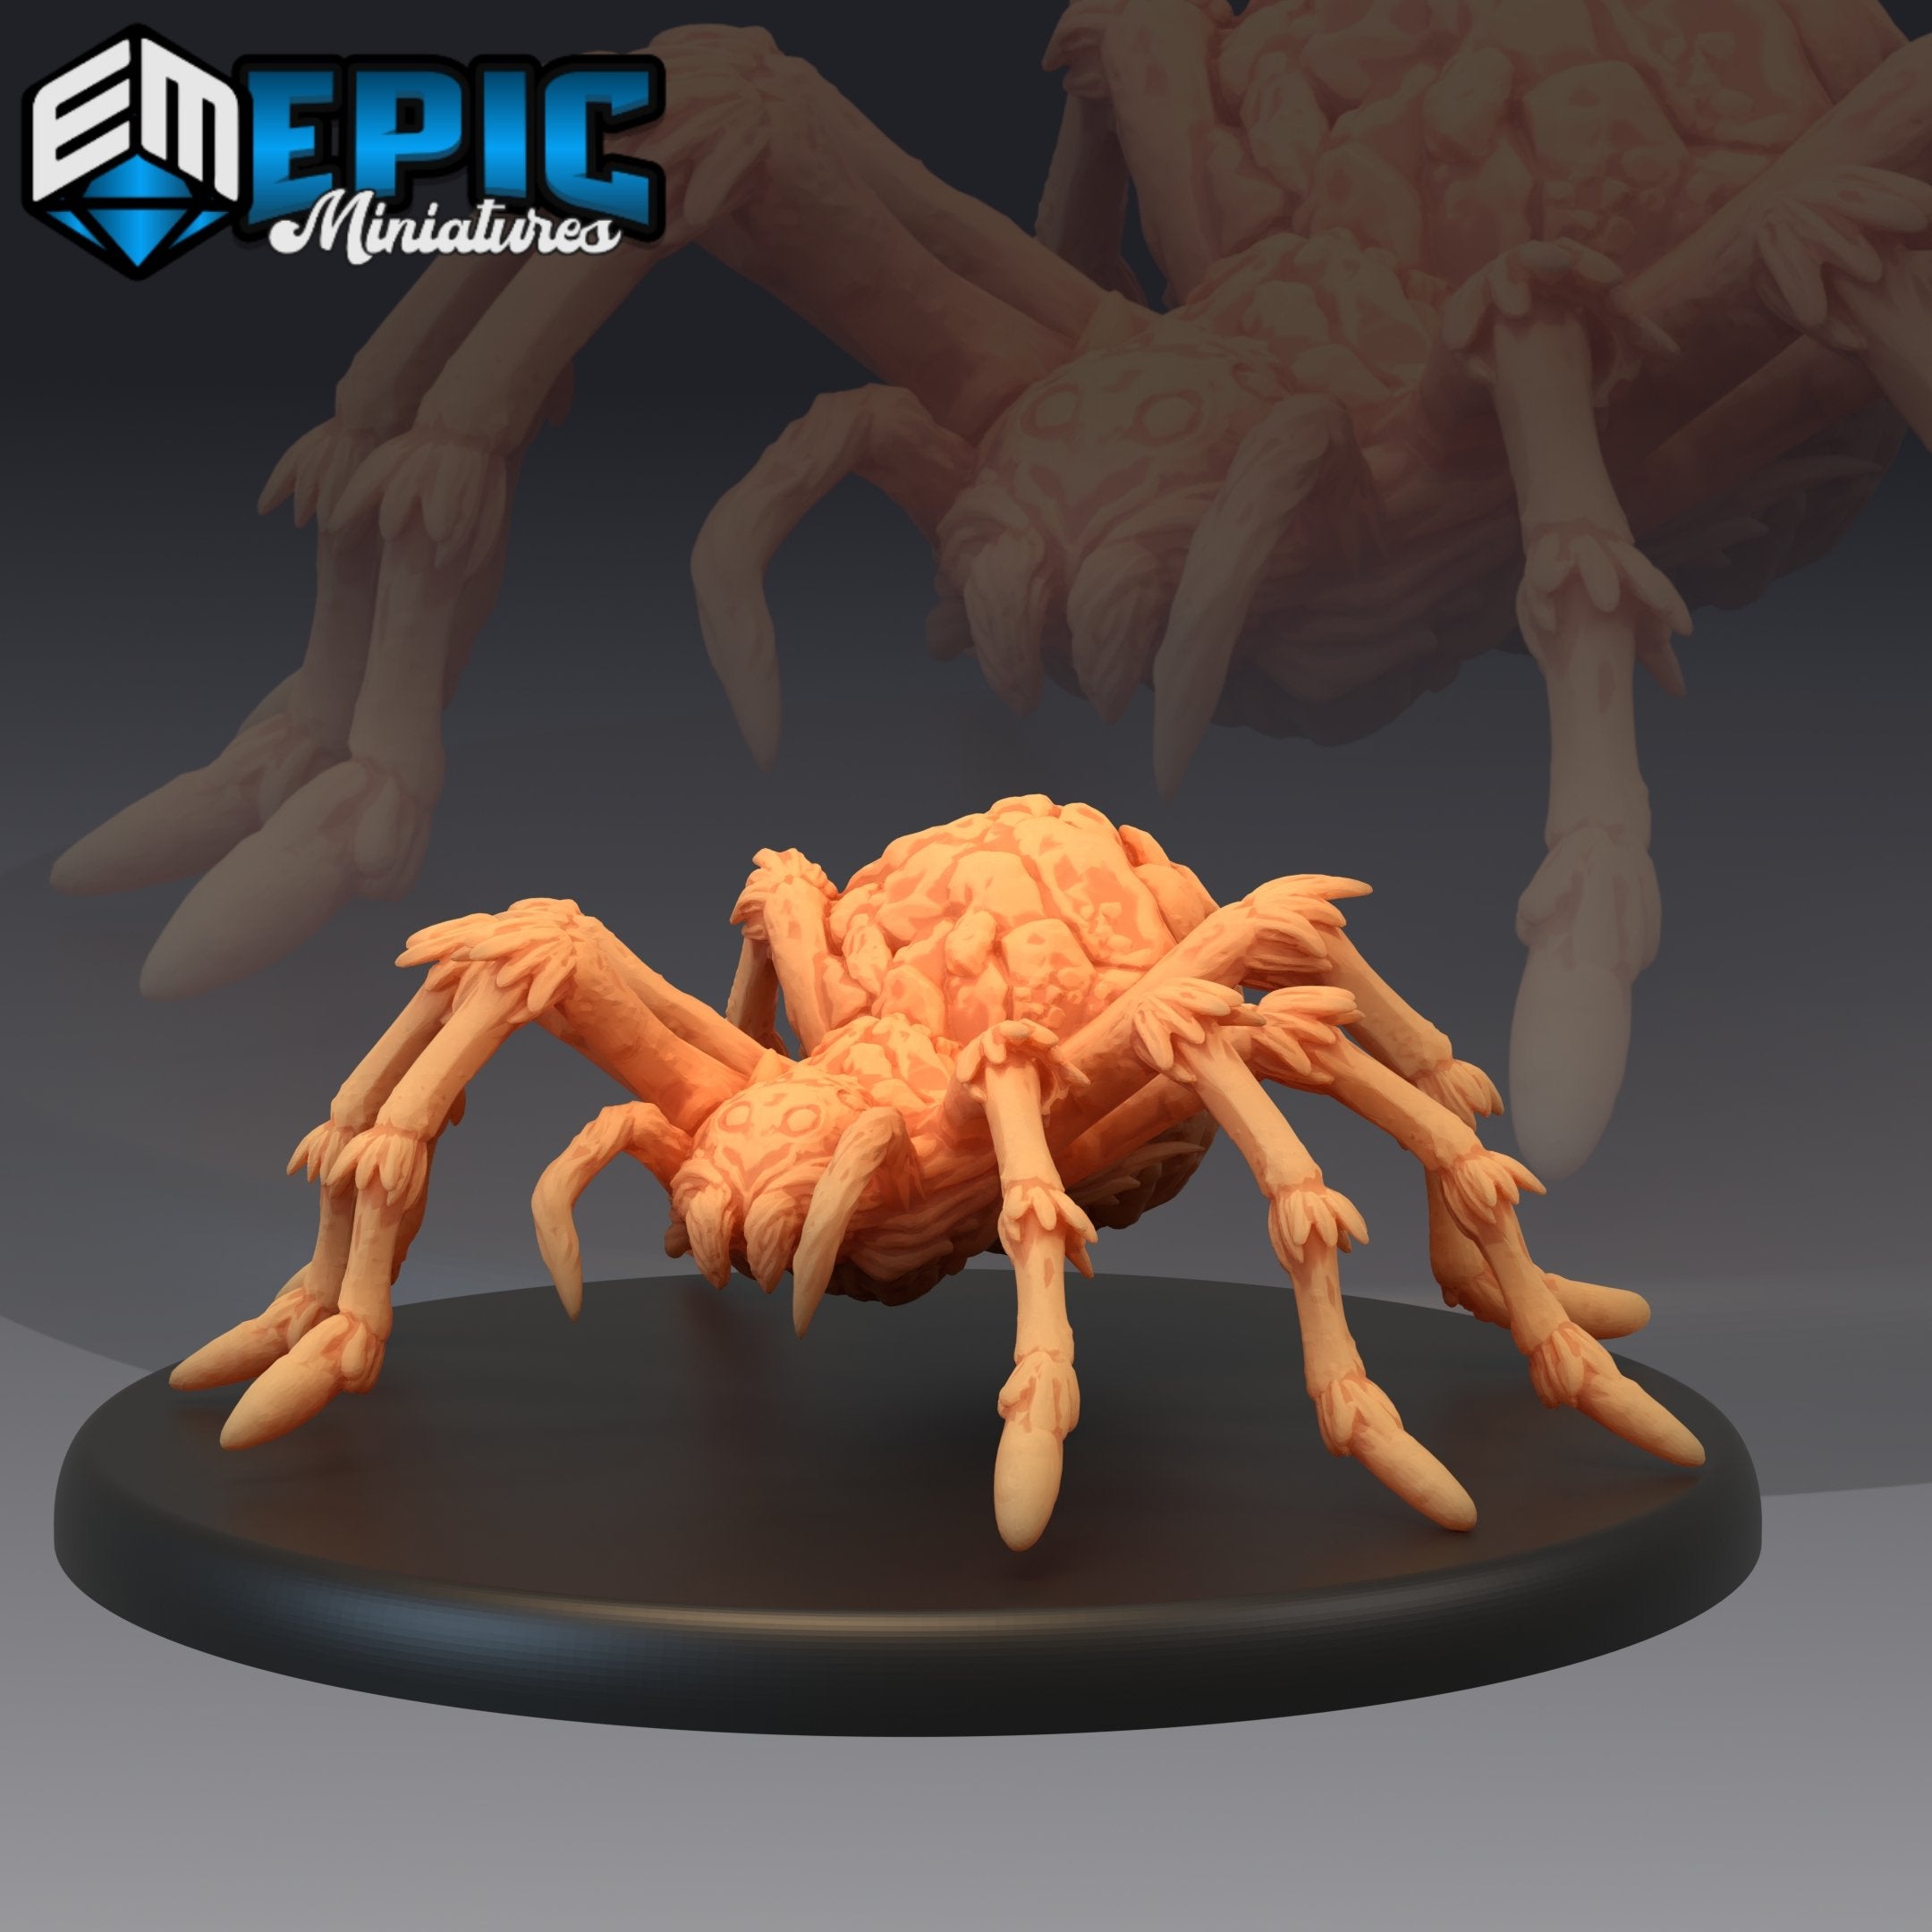 Giant Rock Spider - The Printable Dragon